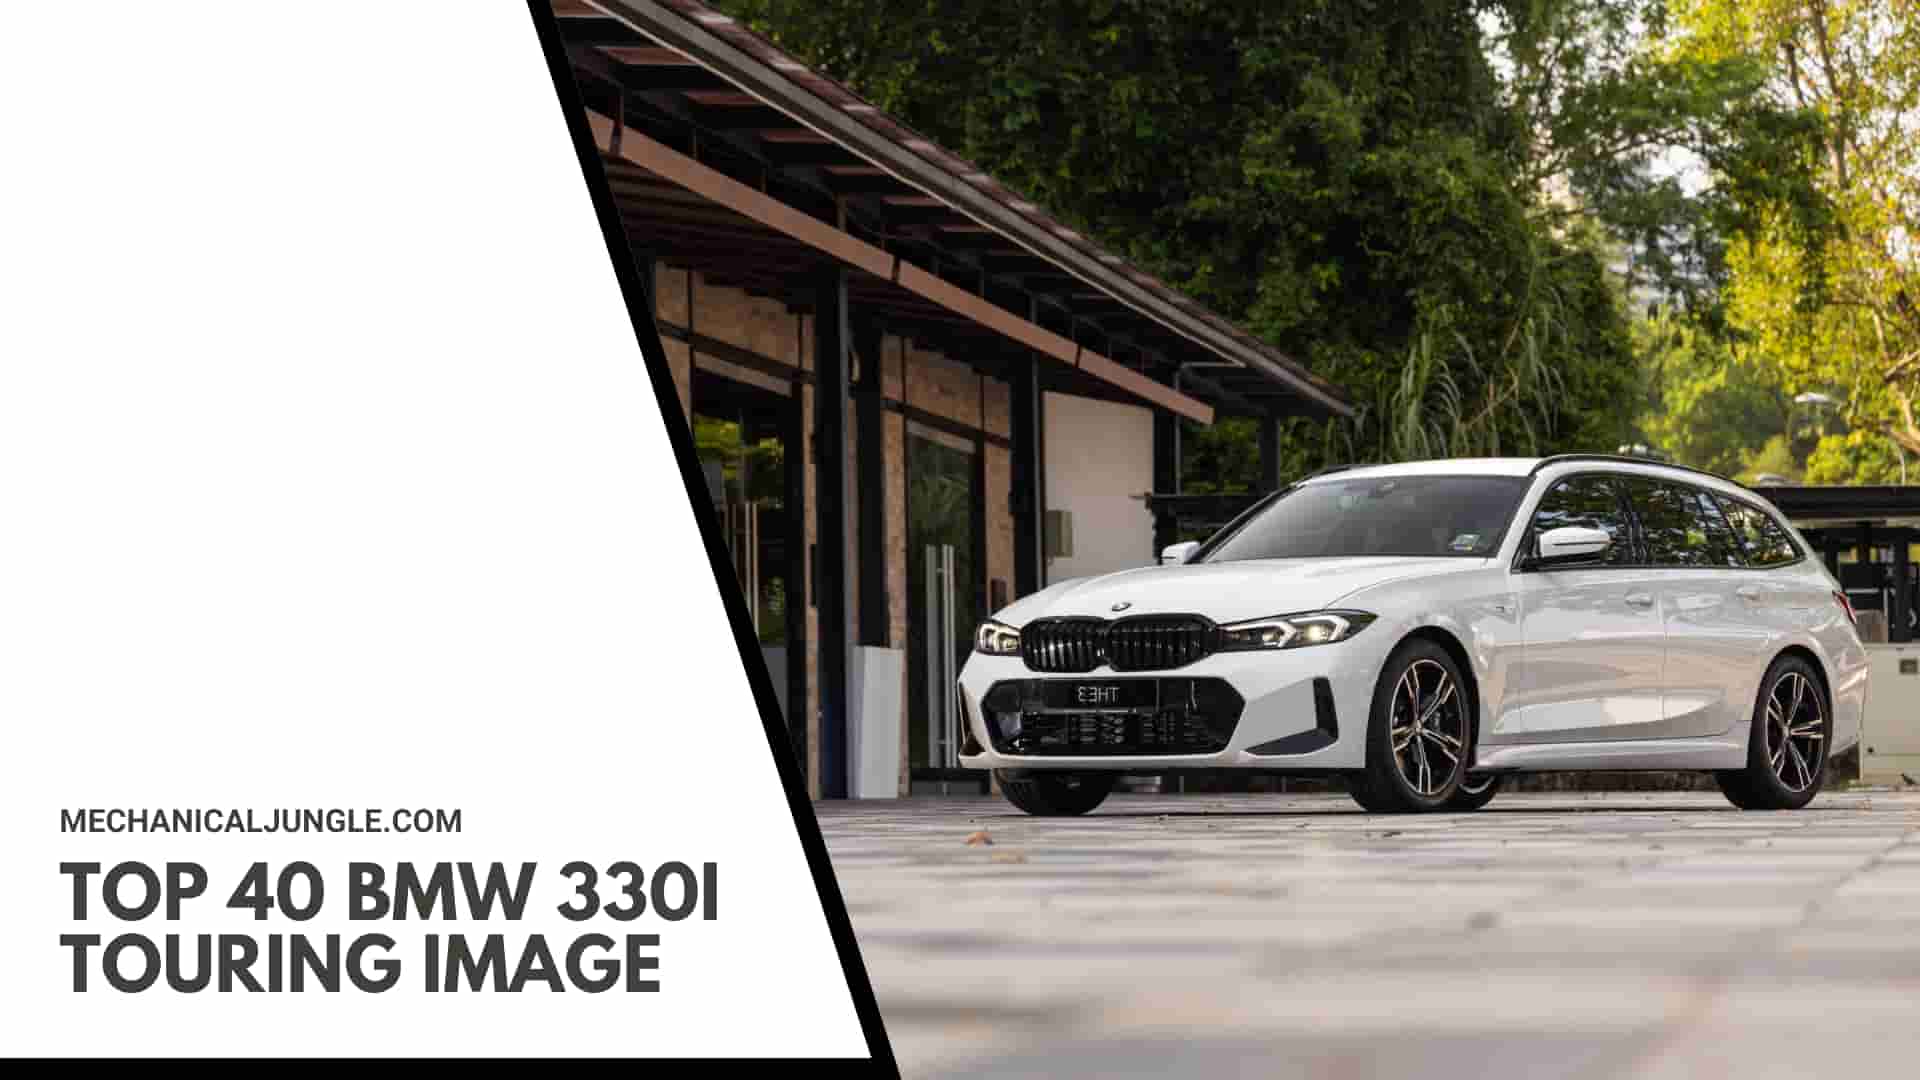 Top 40 BMW 330i Touring Image